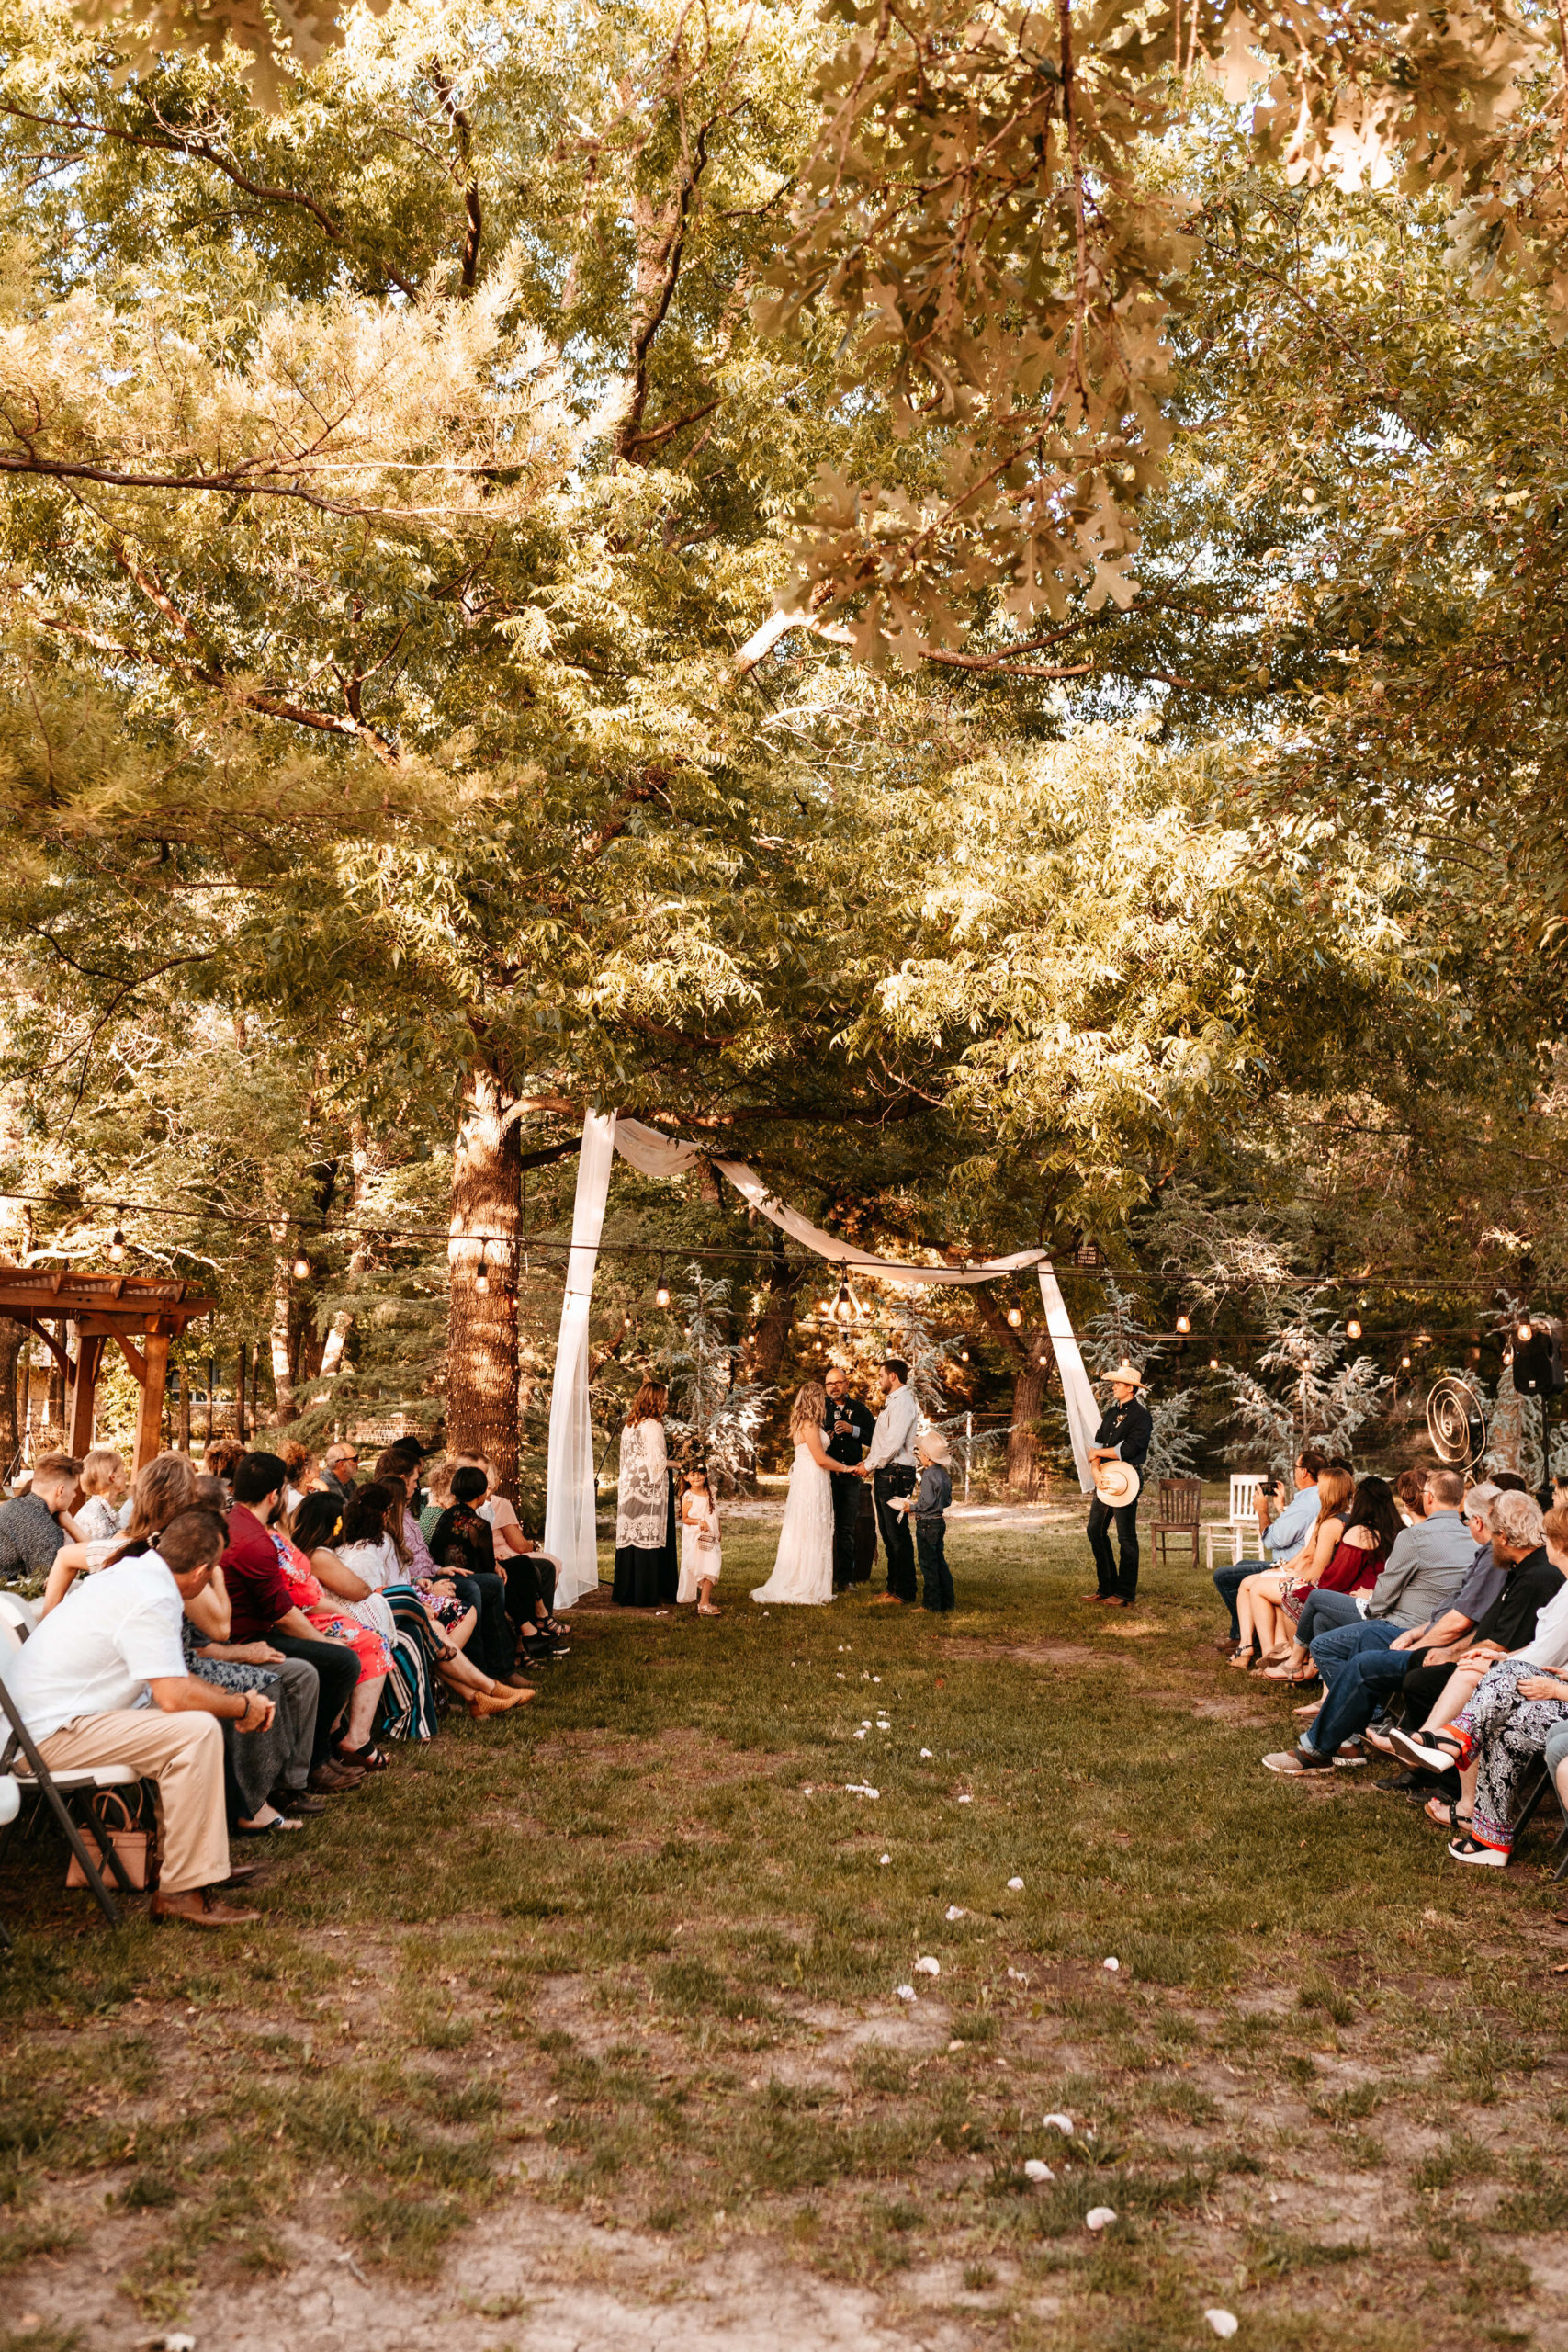 Lynsey + Morgan - Backyard Summer Wichita, Kansas Wedding32.jpg